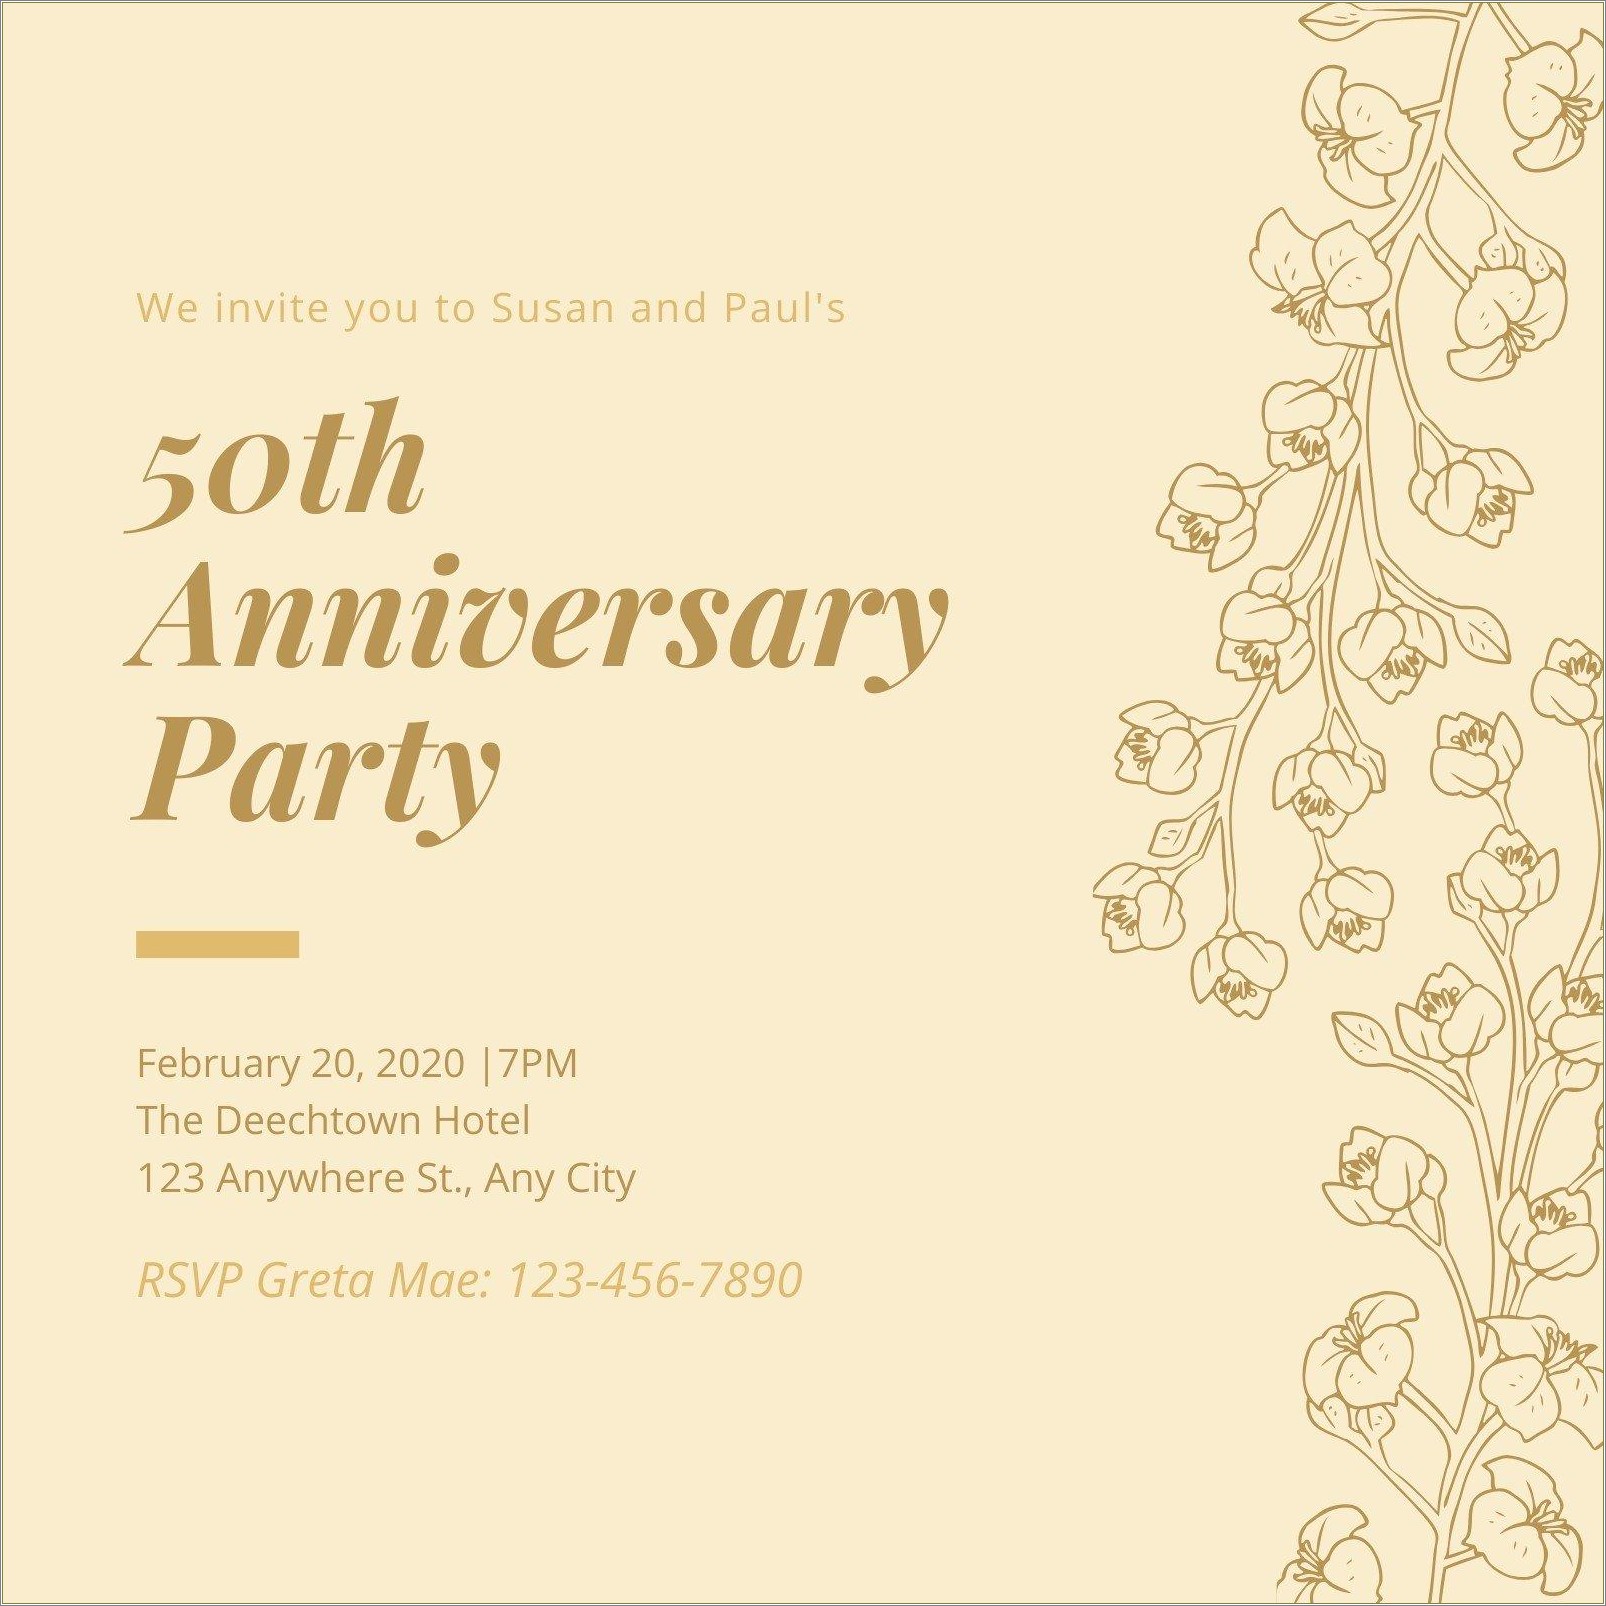 60th Wedding Anniversary Invitations Templates Free Download